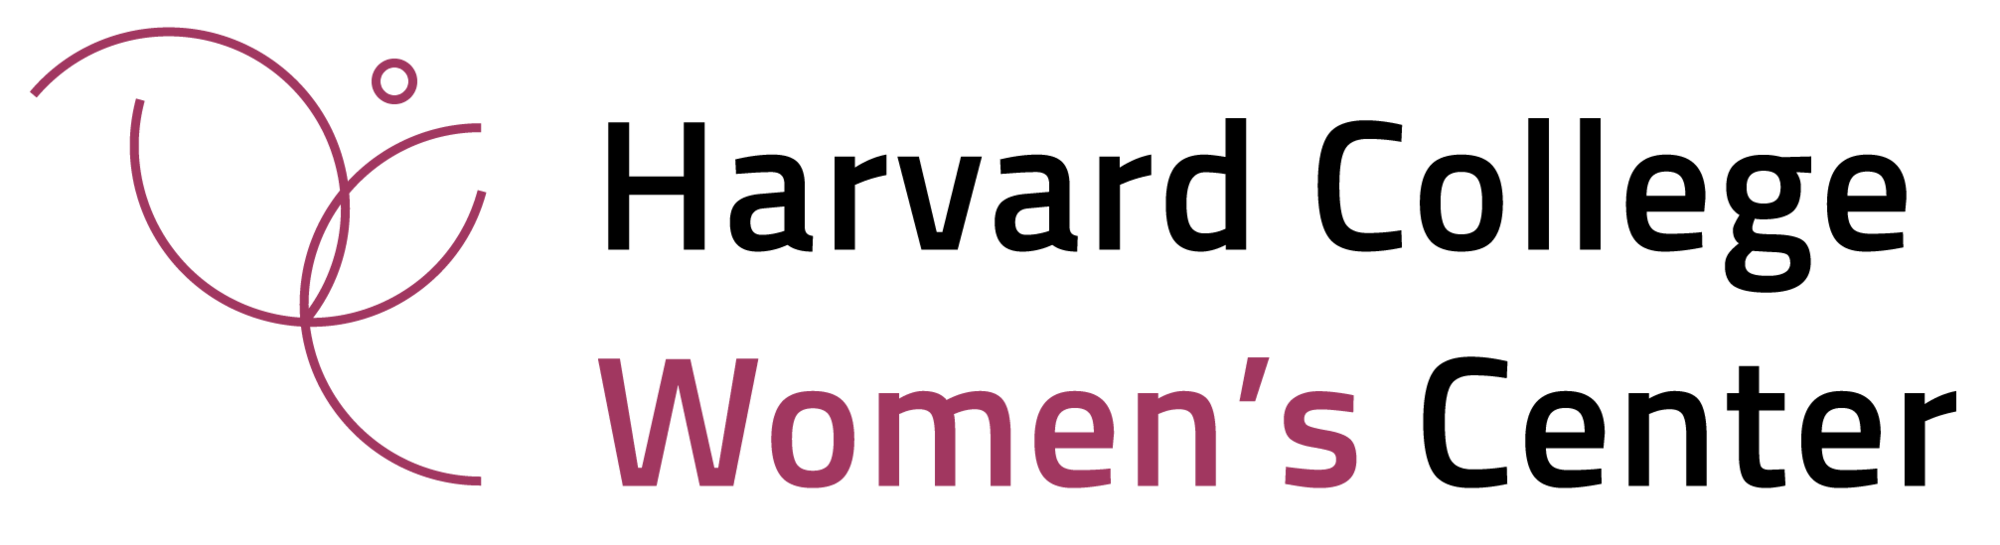 Harvard College Women's Center logo